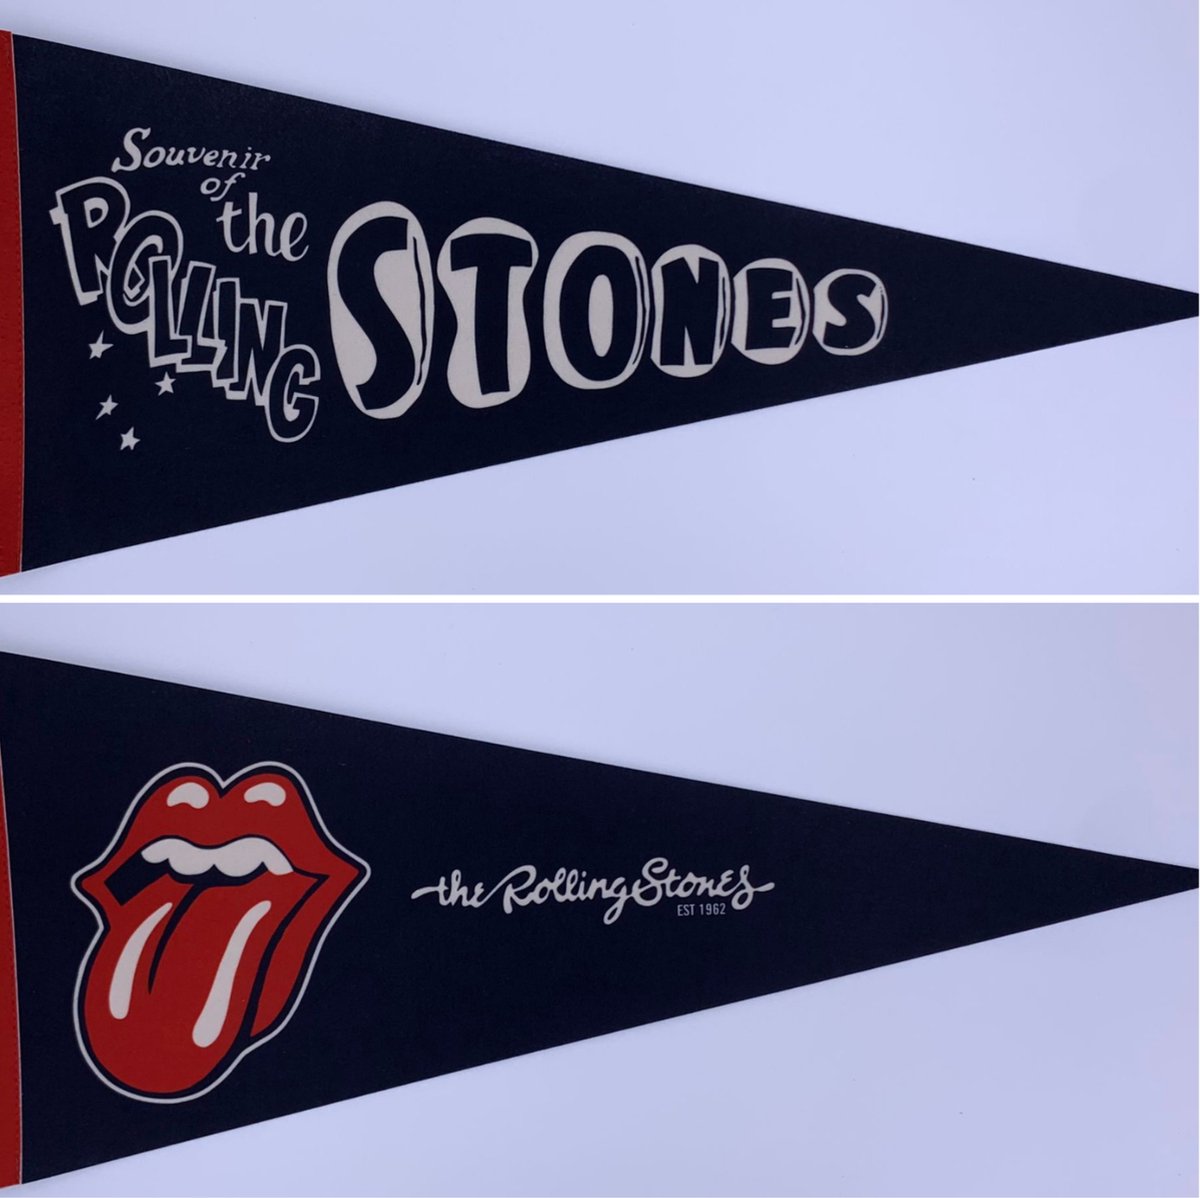 The Rolling Stones - stones band - stones logo - Muziek - Vaantje - UK - Sportvaantje - Wimpel - Vlag - Pennant - 31*72 cm - souvenir